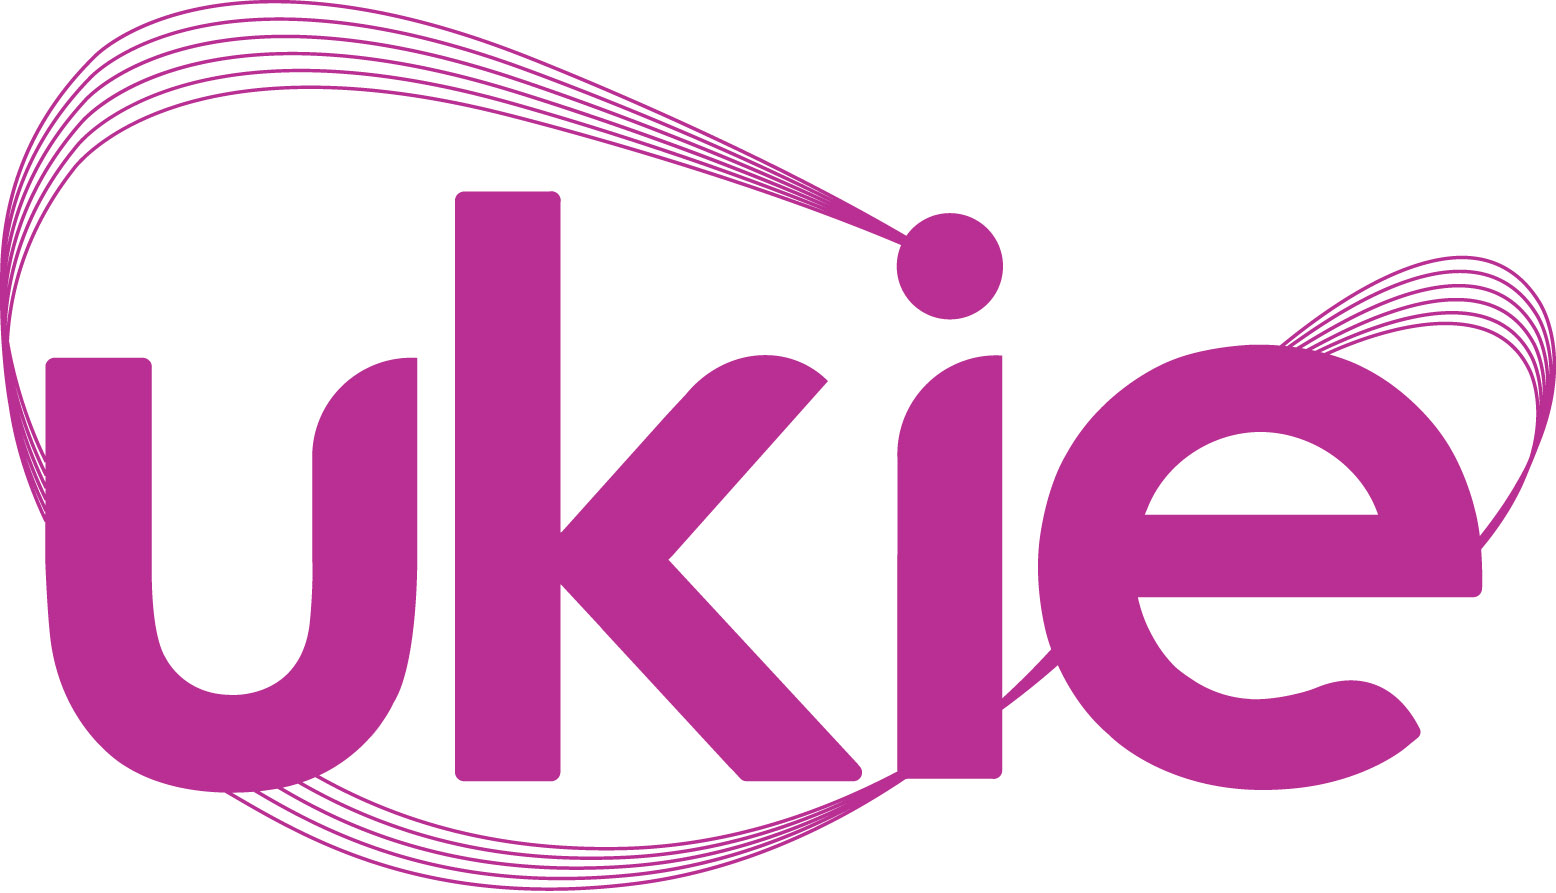 Ukie logo magenta.jpg  Venatus Gaming Ad Network